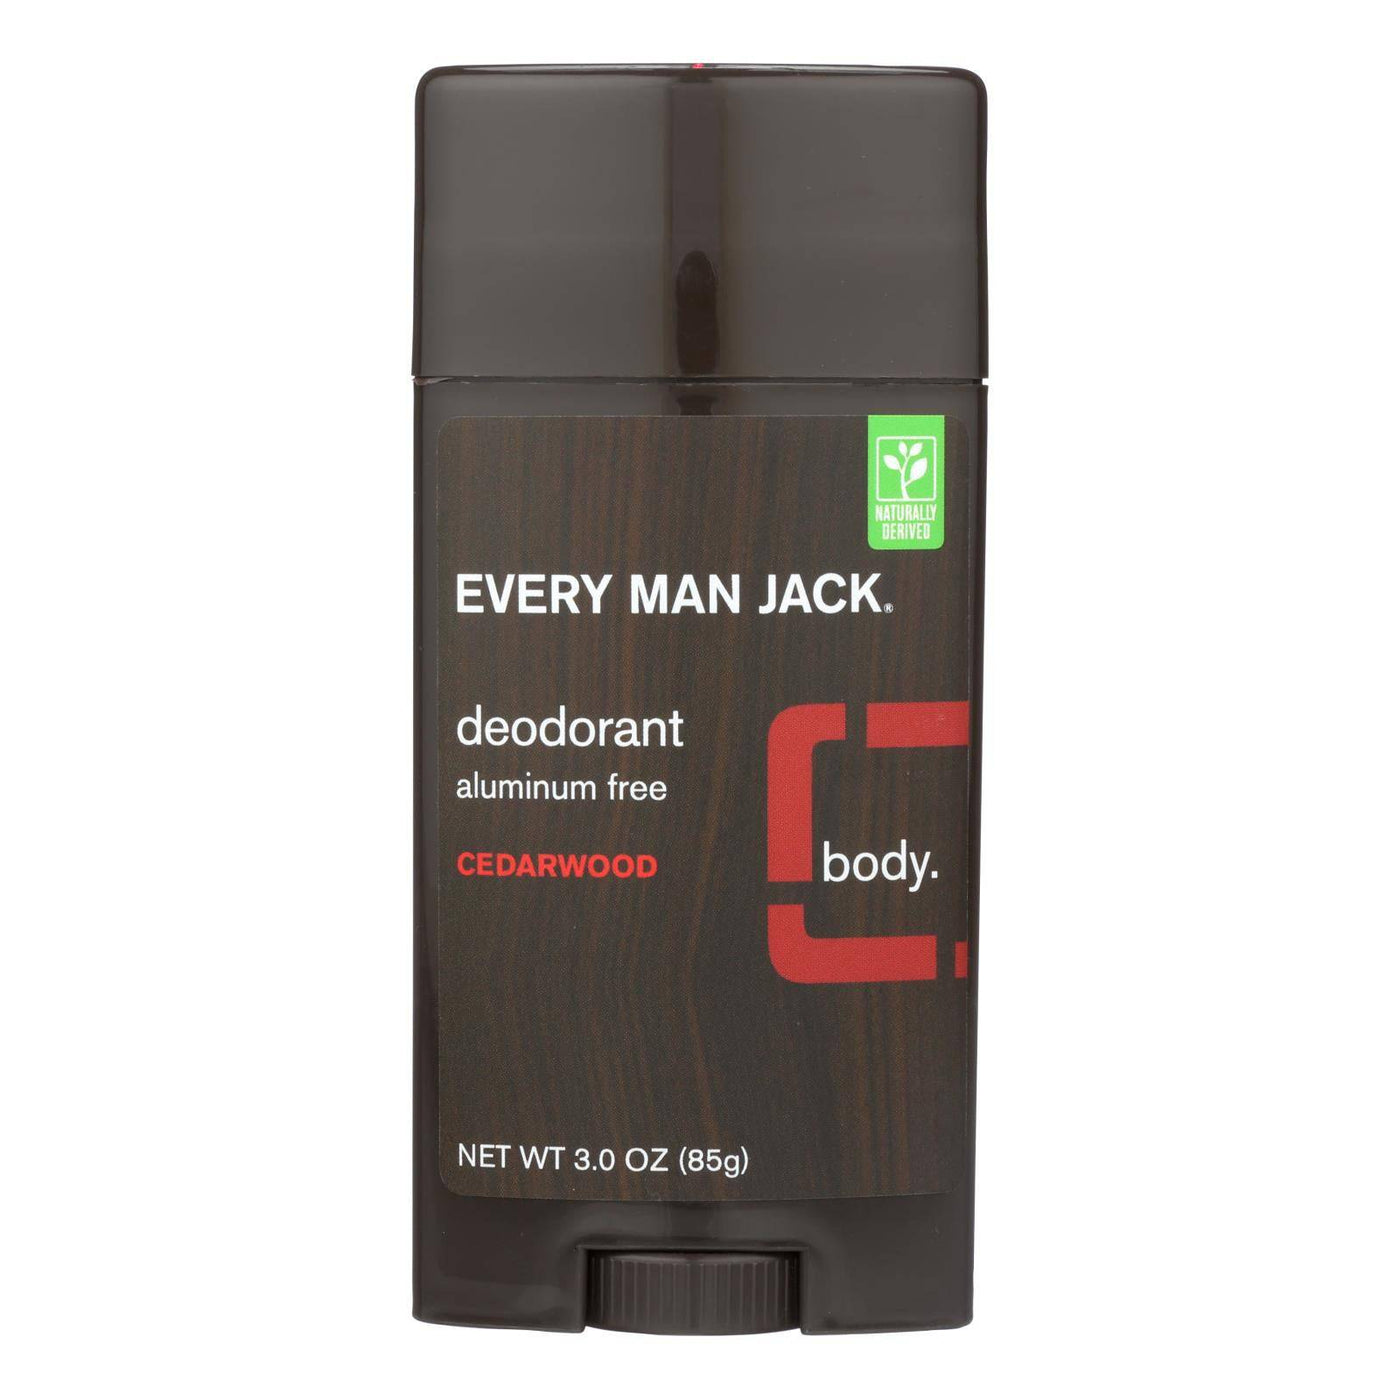 Every Man Jack Body Deodorant - Cedarwood - Aluminum Free - 3 Oz | OnlyNaturals.us